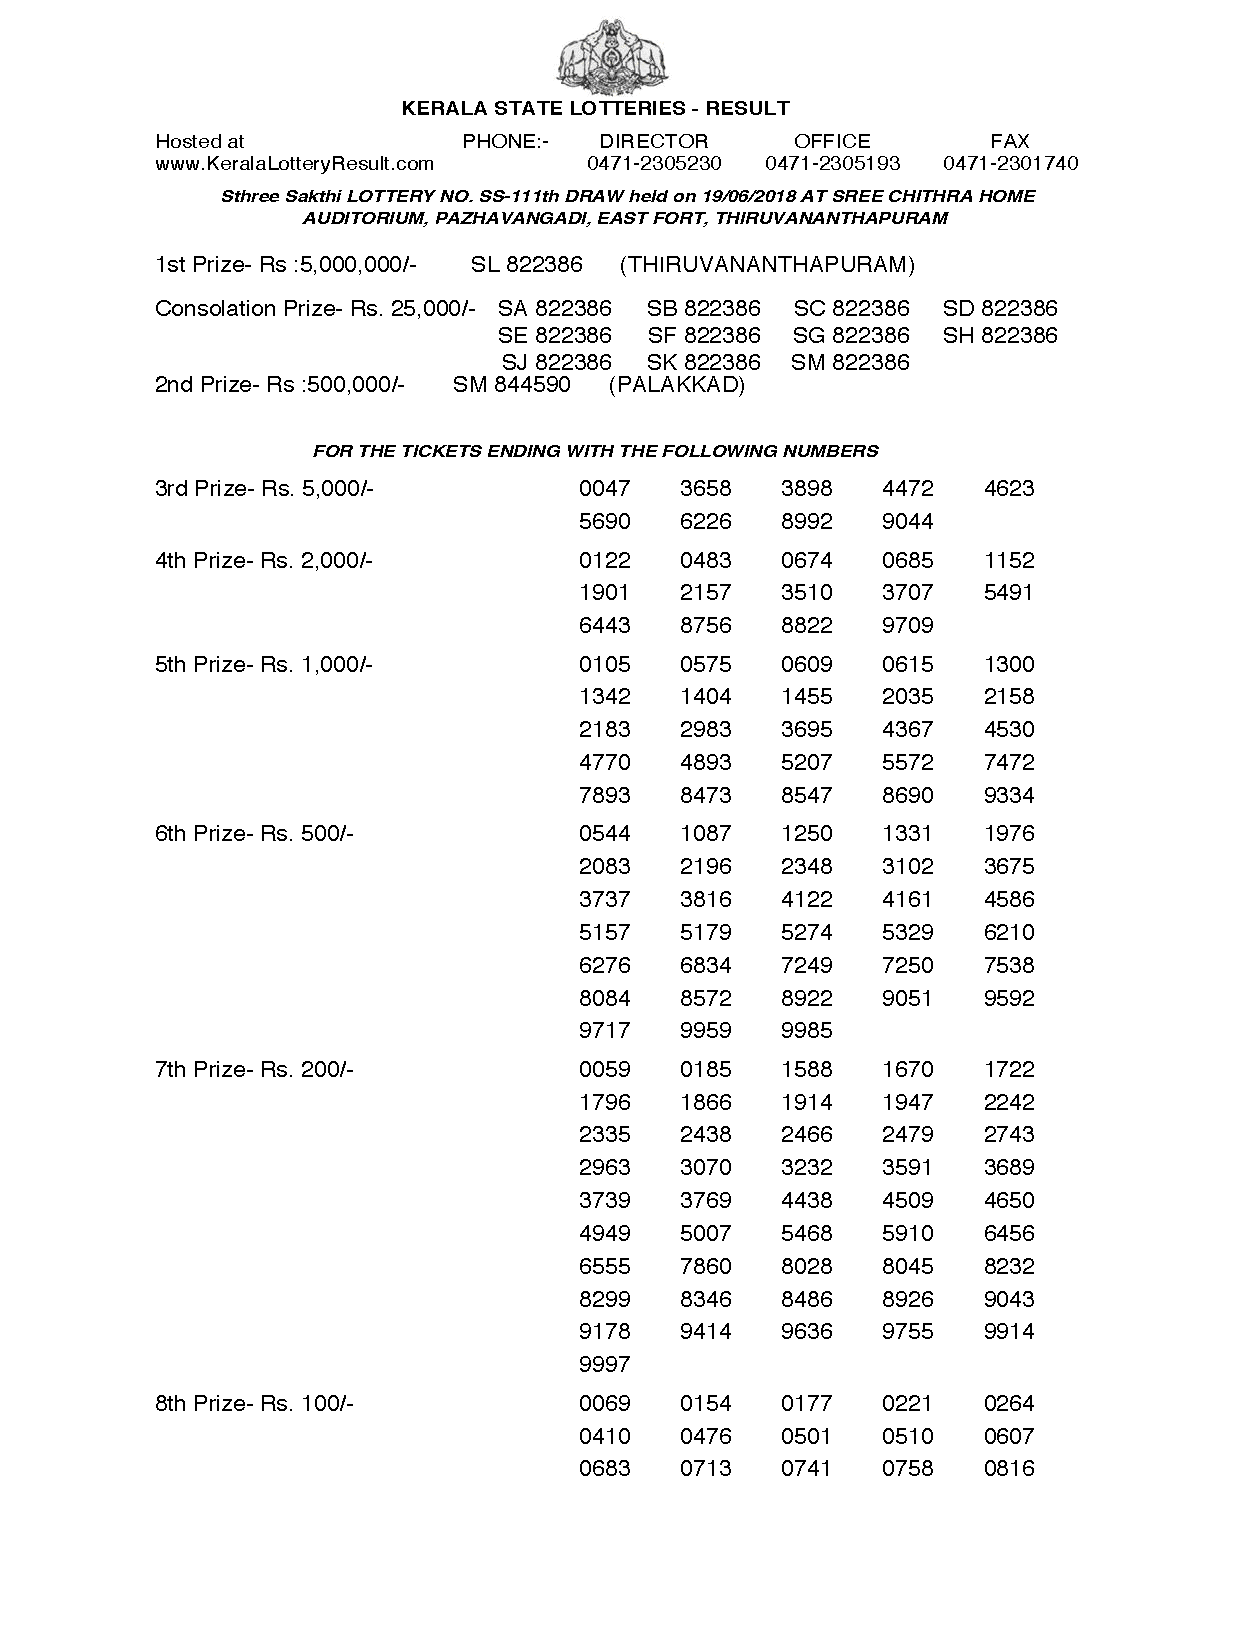 Sthree Sakthi SS111 Kerala Lottery Results Screenshot: Page 1